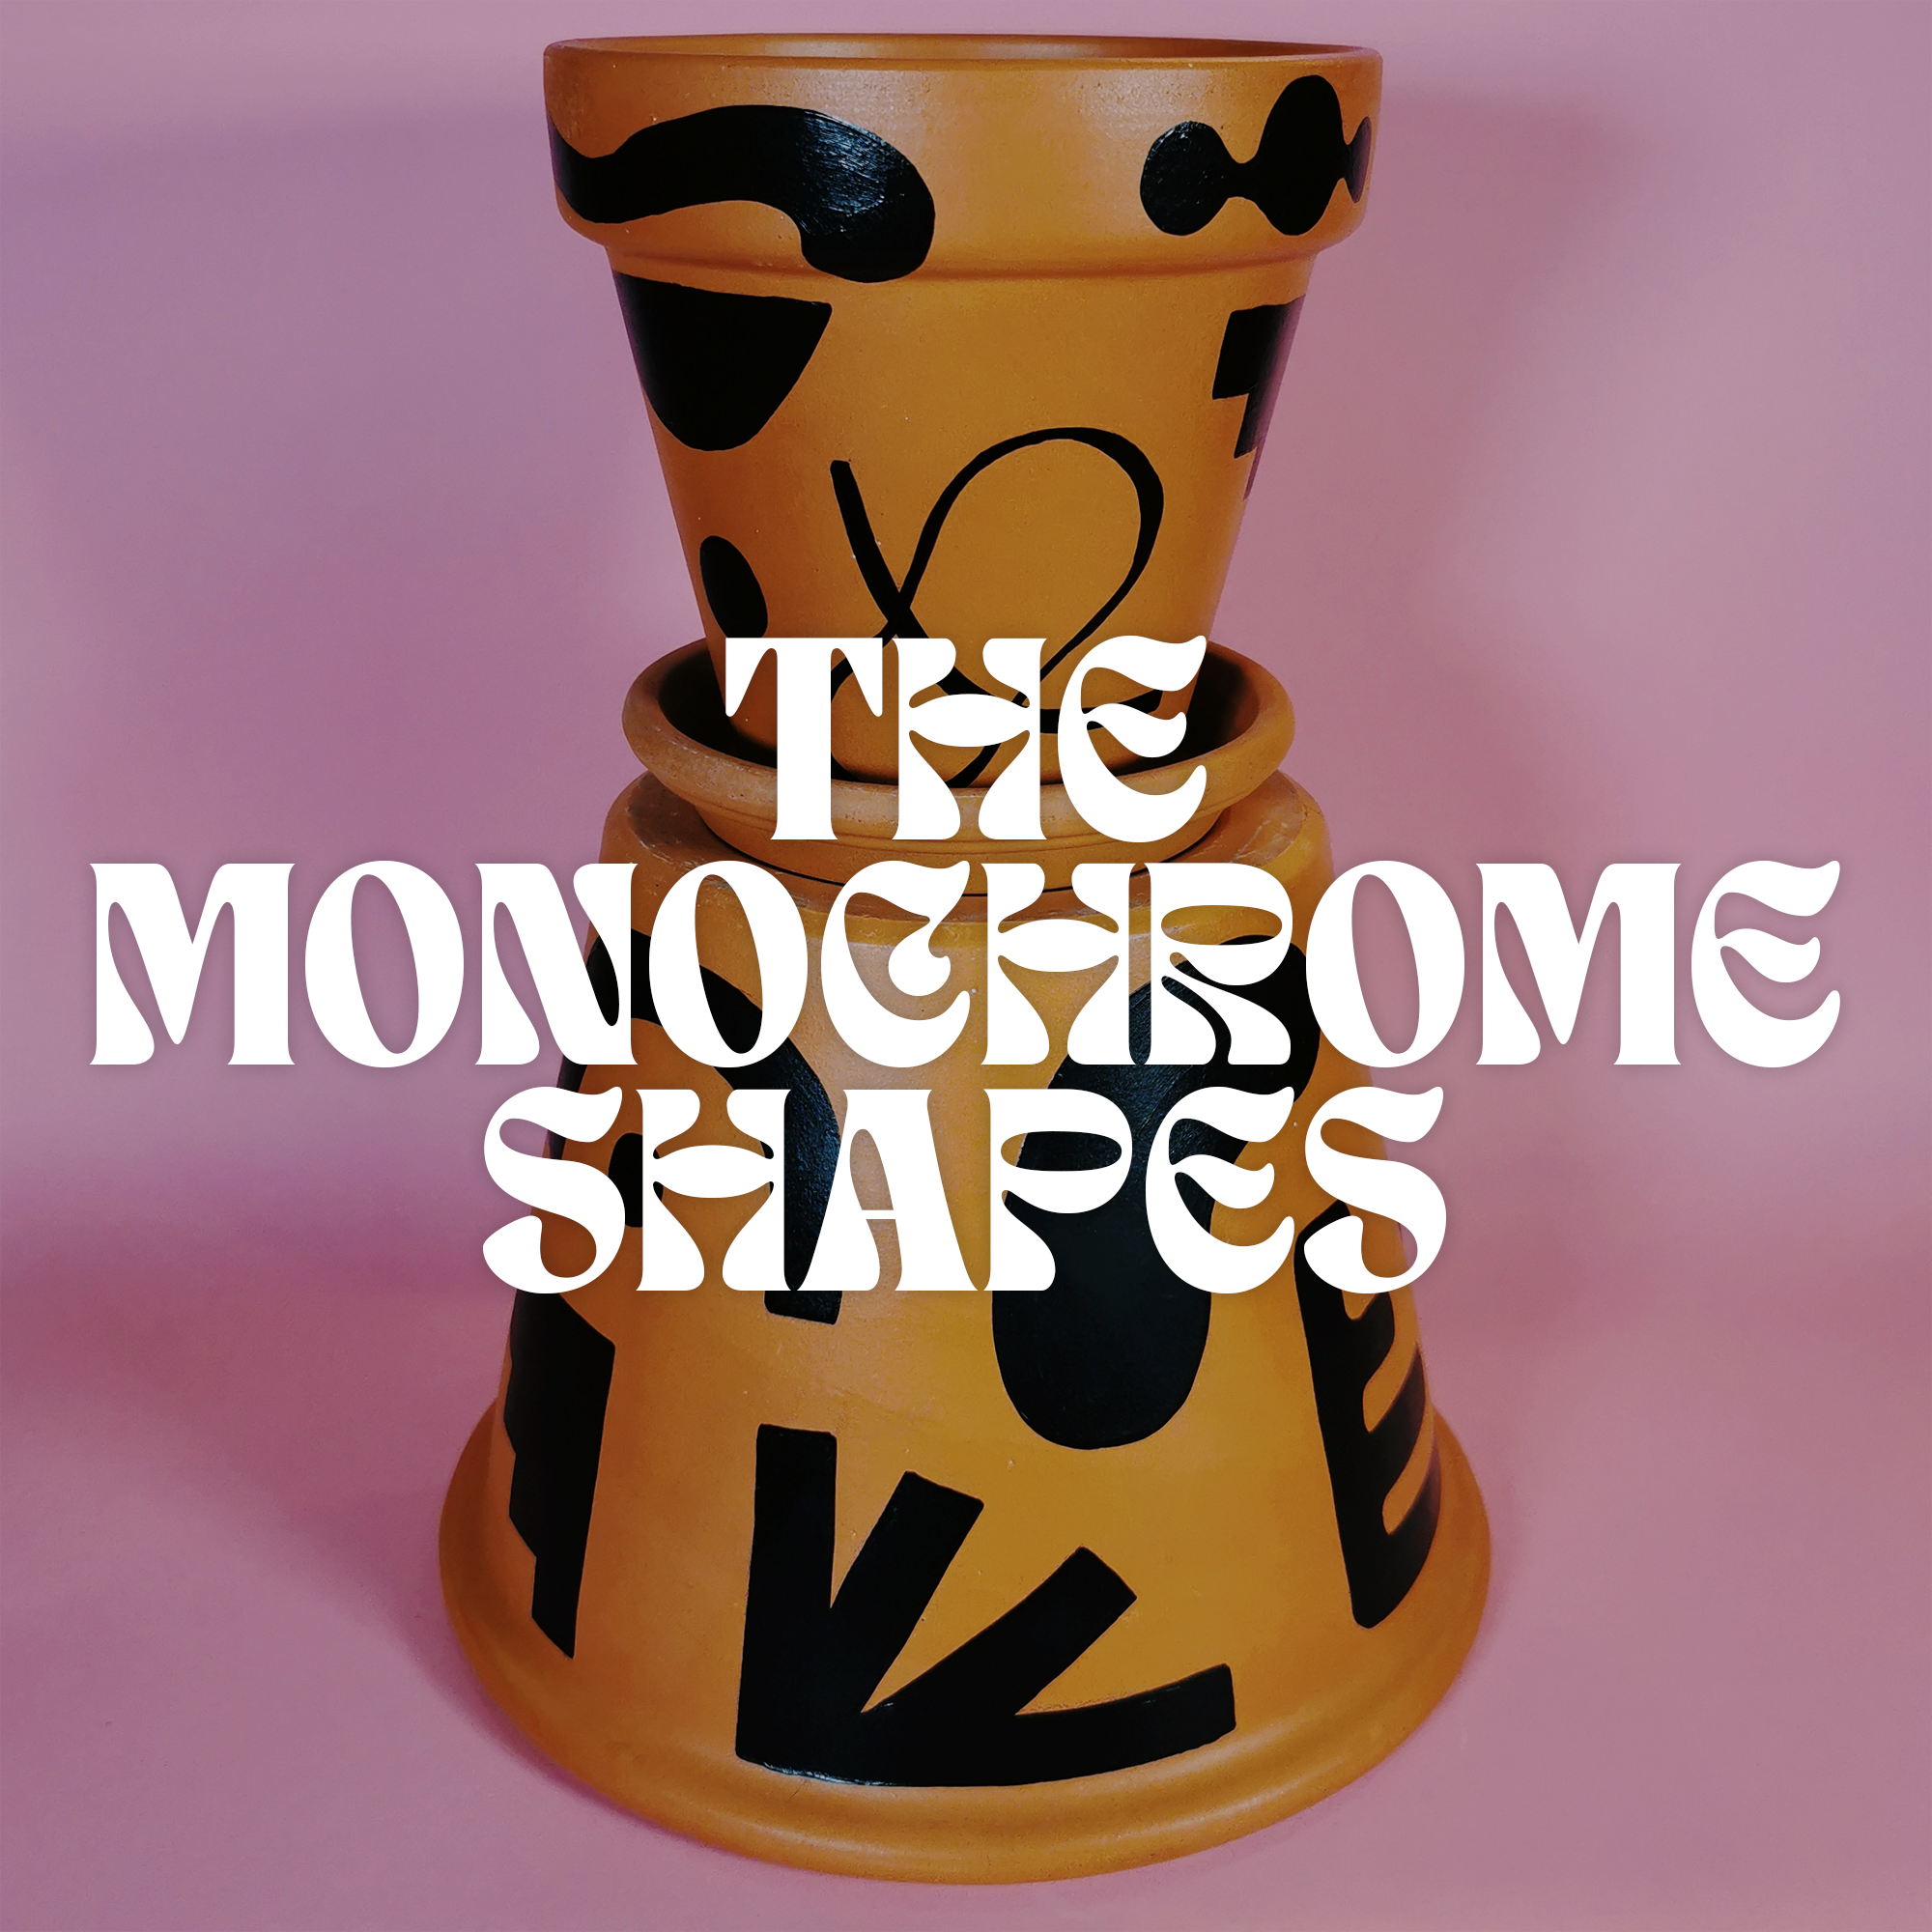 The Monochrome Shapes